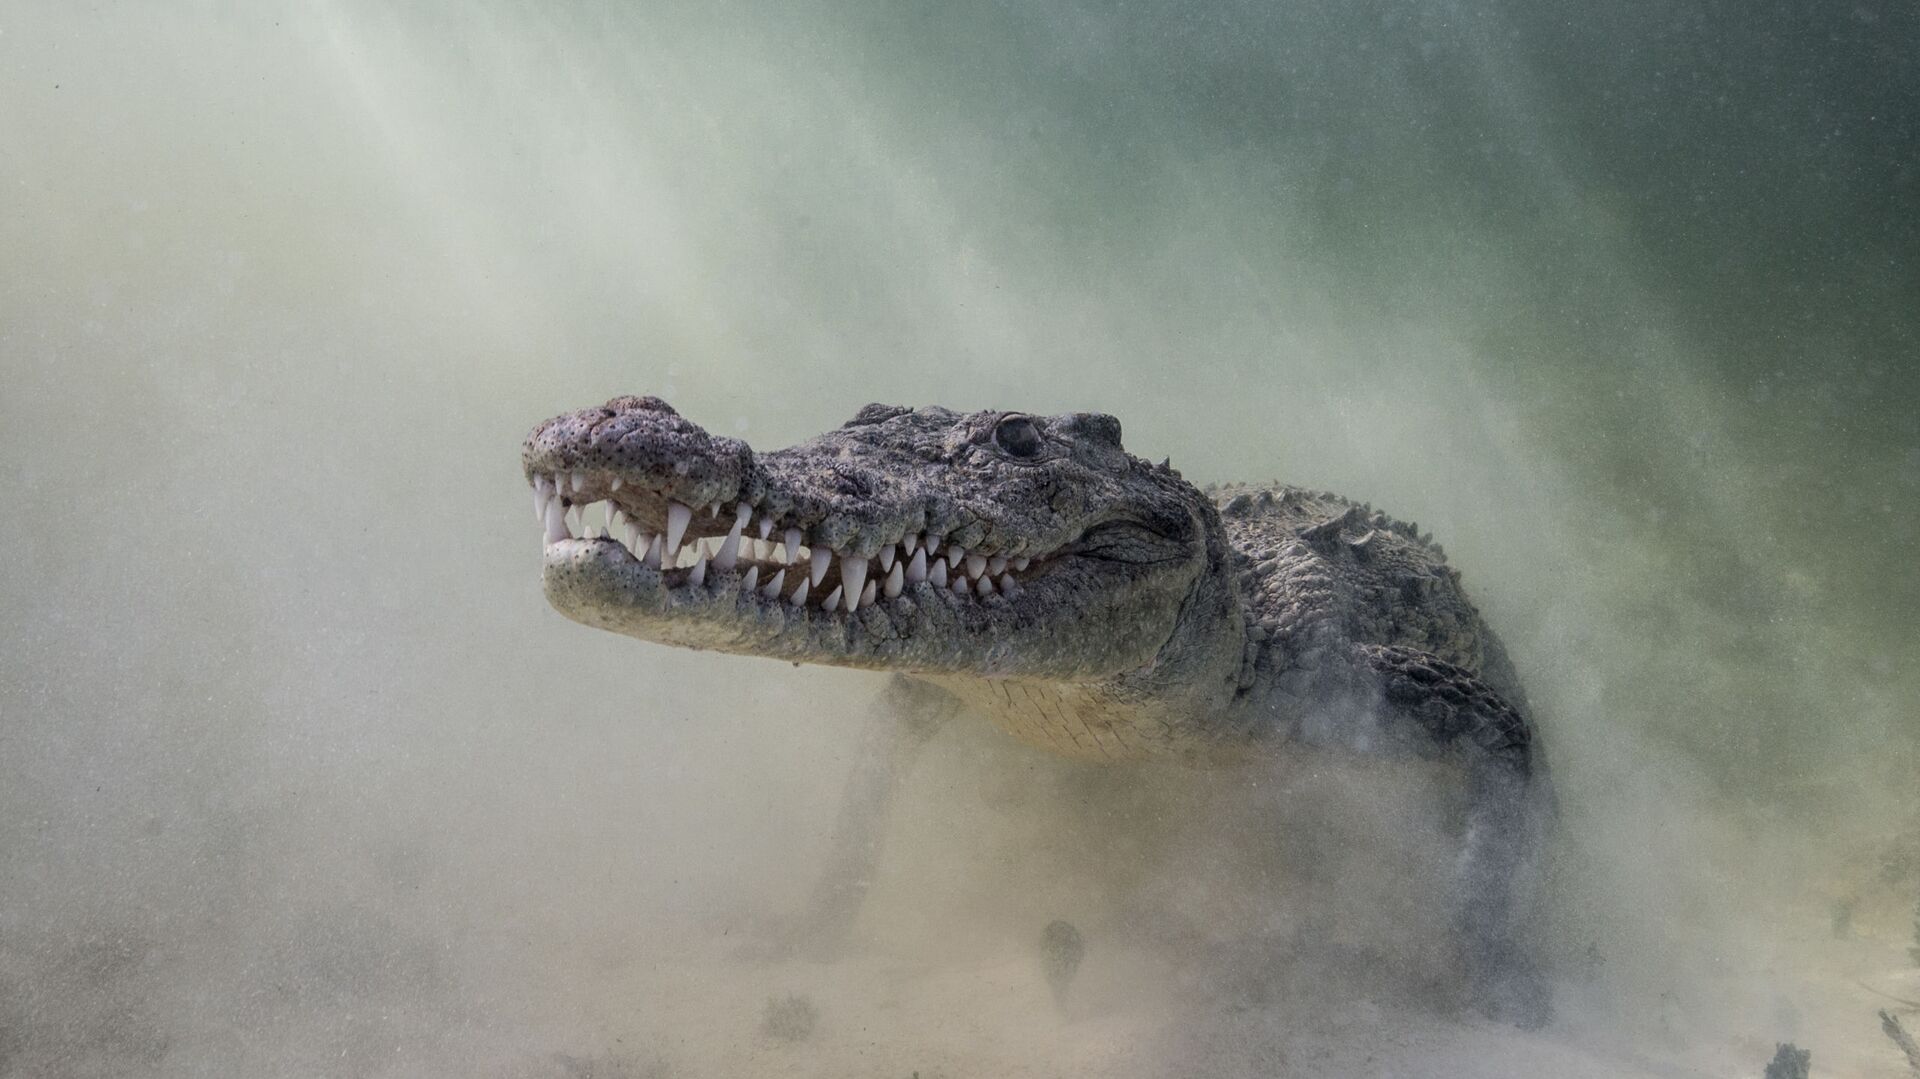 Острорылый крокодил на снимке Croc in the Mist - победившем в категории Portrait Category конкурса 7th Annual Ocean Art Underwater Photo Contest - Sputnik Ўзбекистон, 1920, 25.10.2021